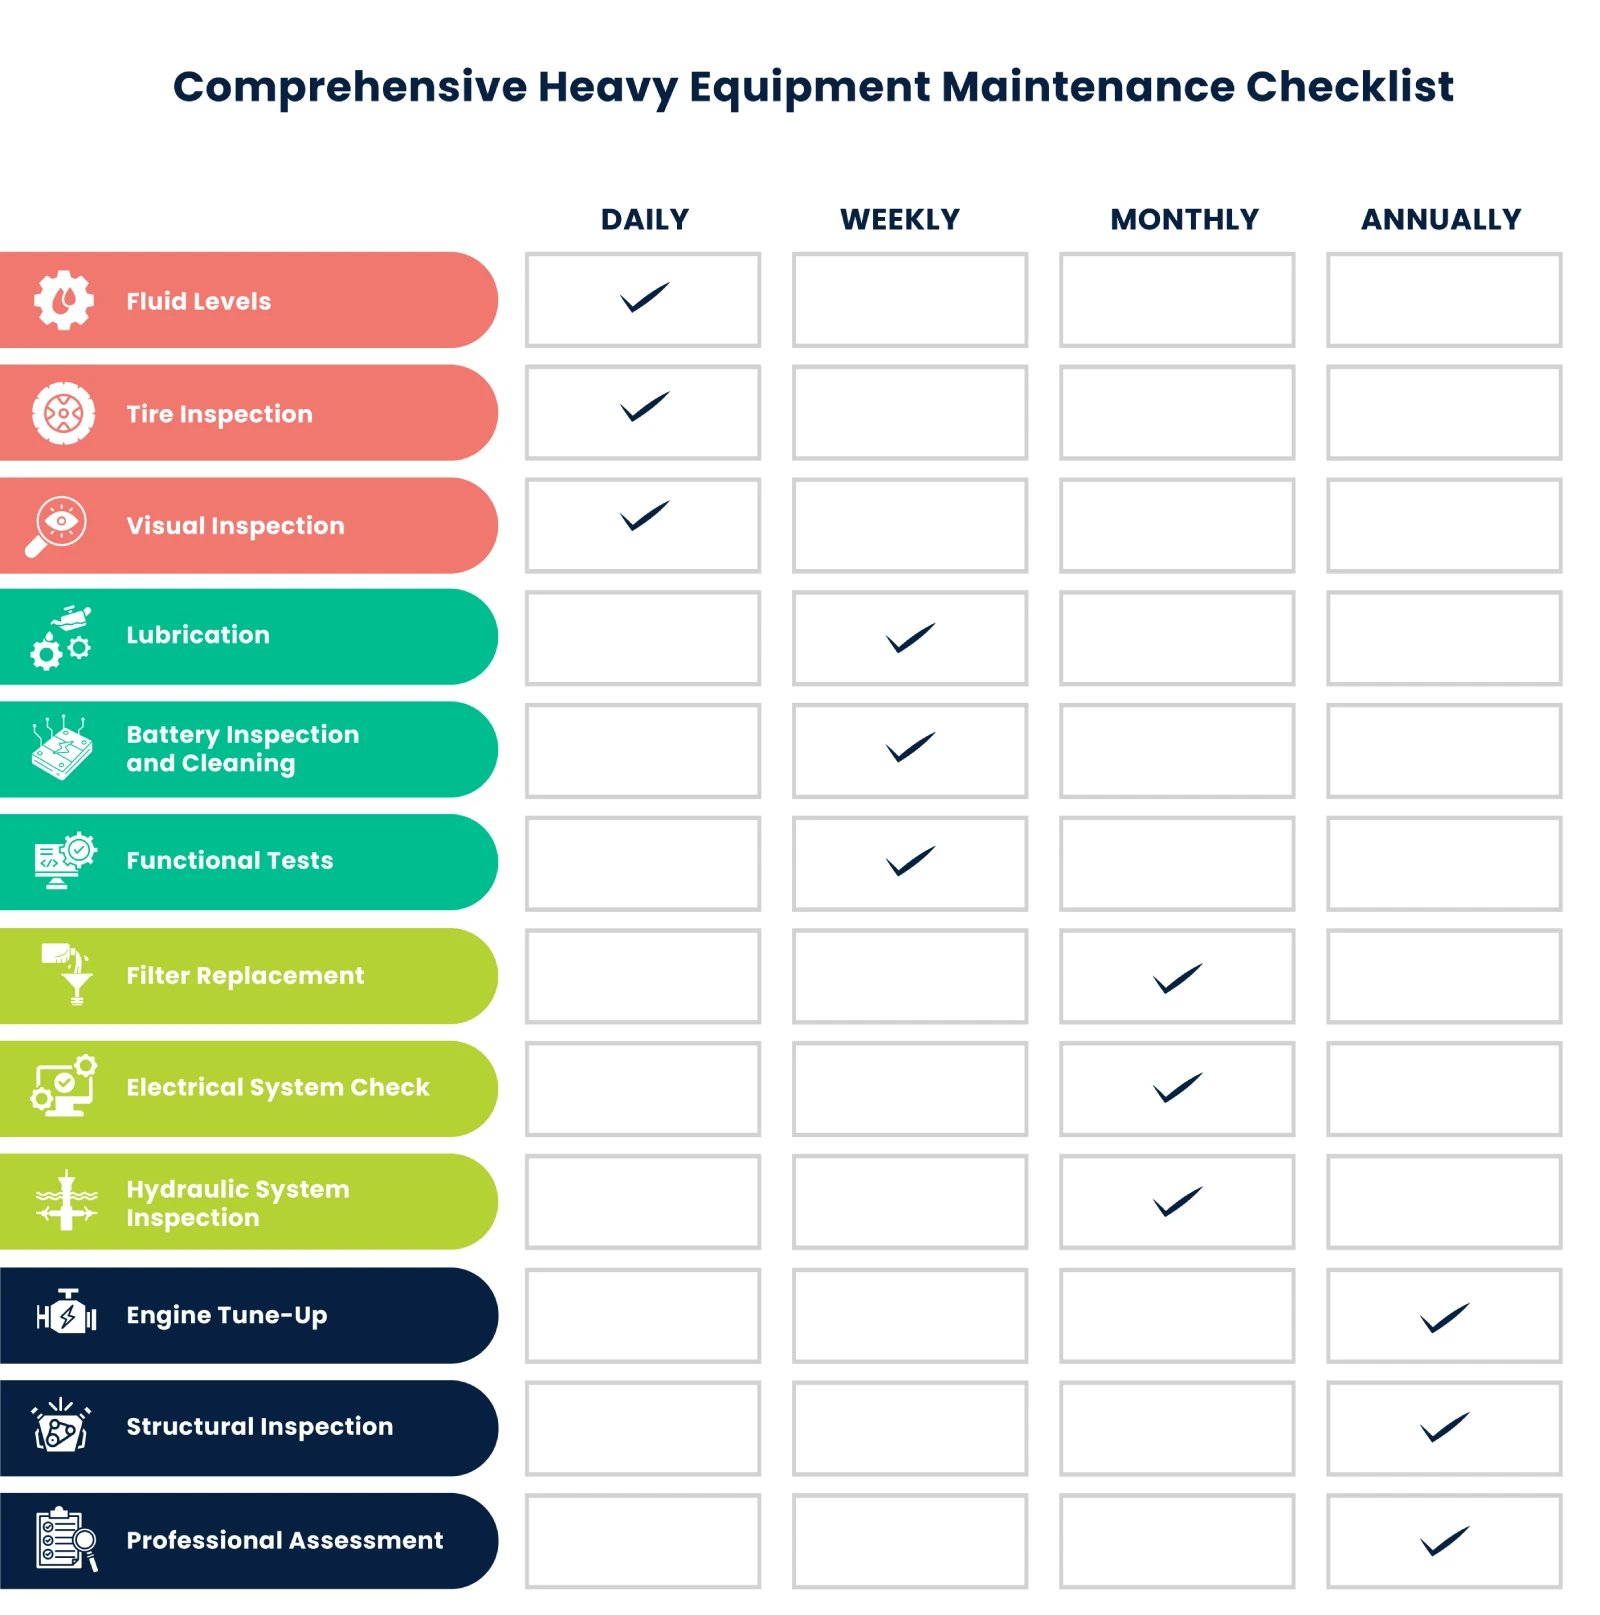 heavy equipment preventive maintenance checklist the comprehensive heavy equipment maintenance checklist